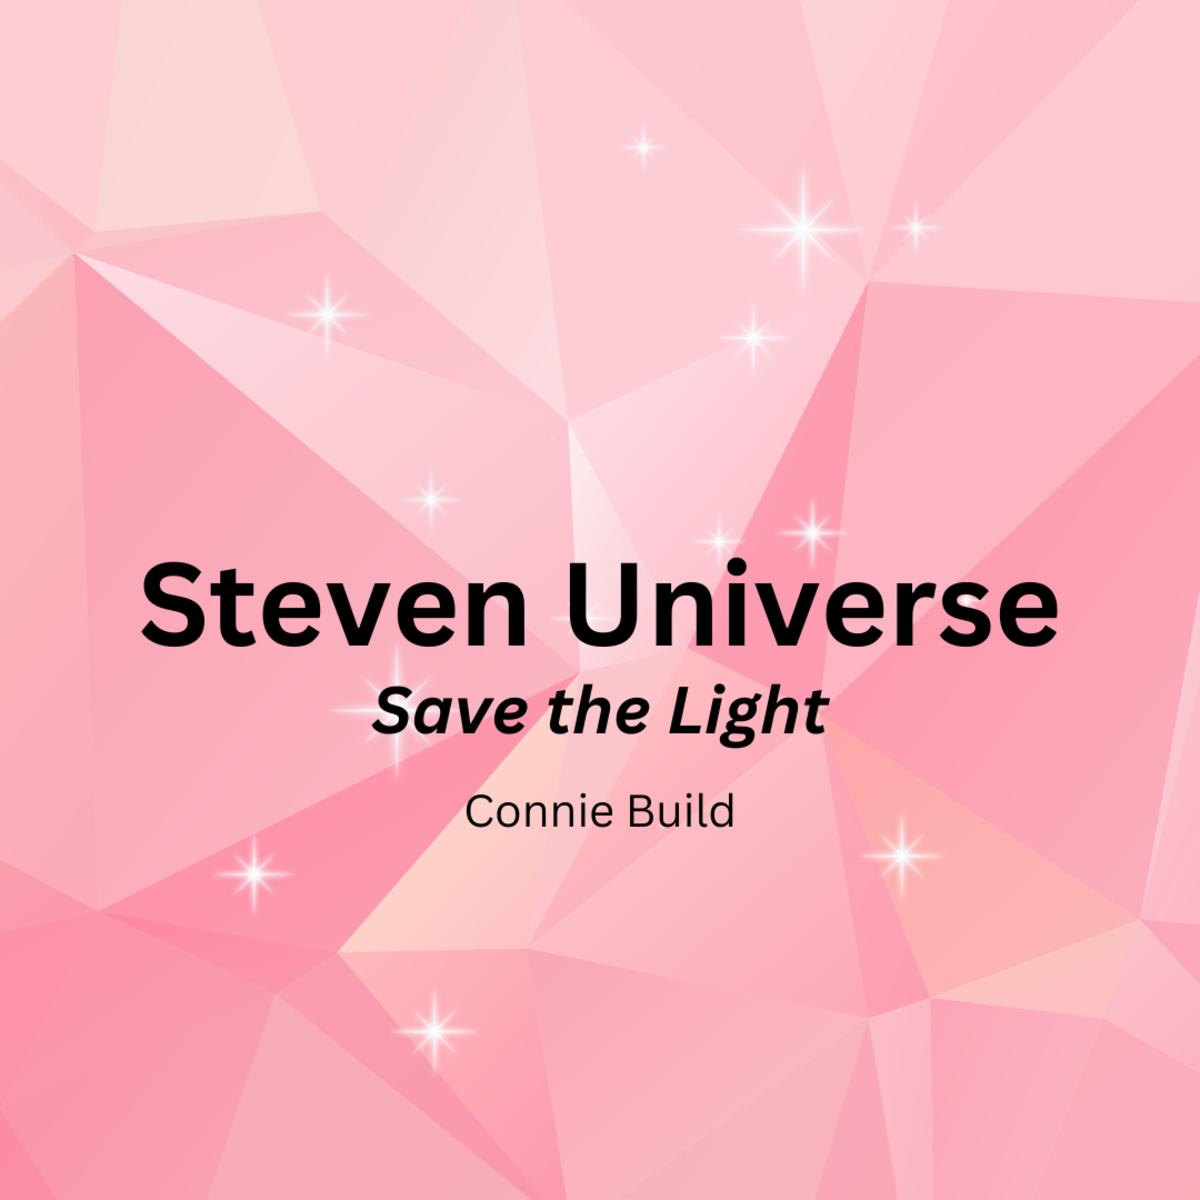 “Steven Universe: Save the Light”: Connie Build Guide